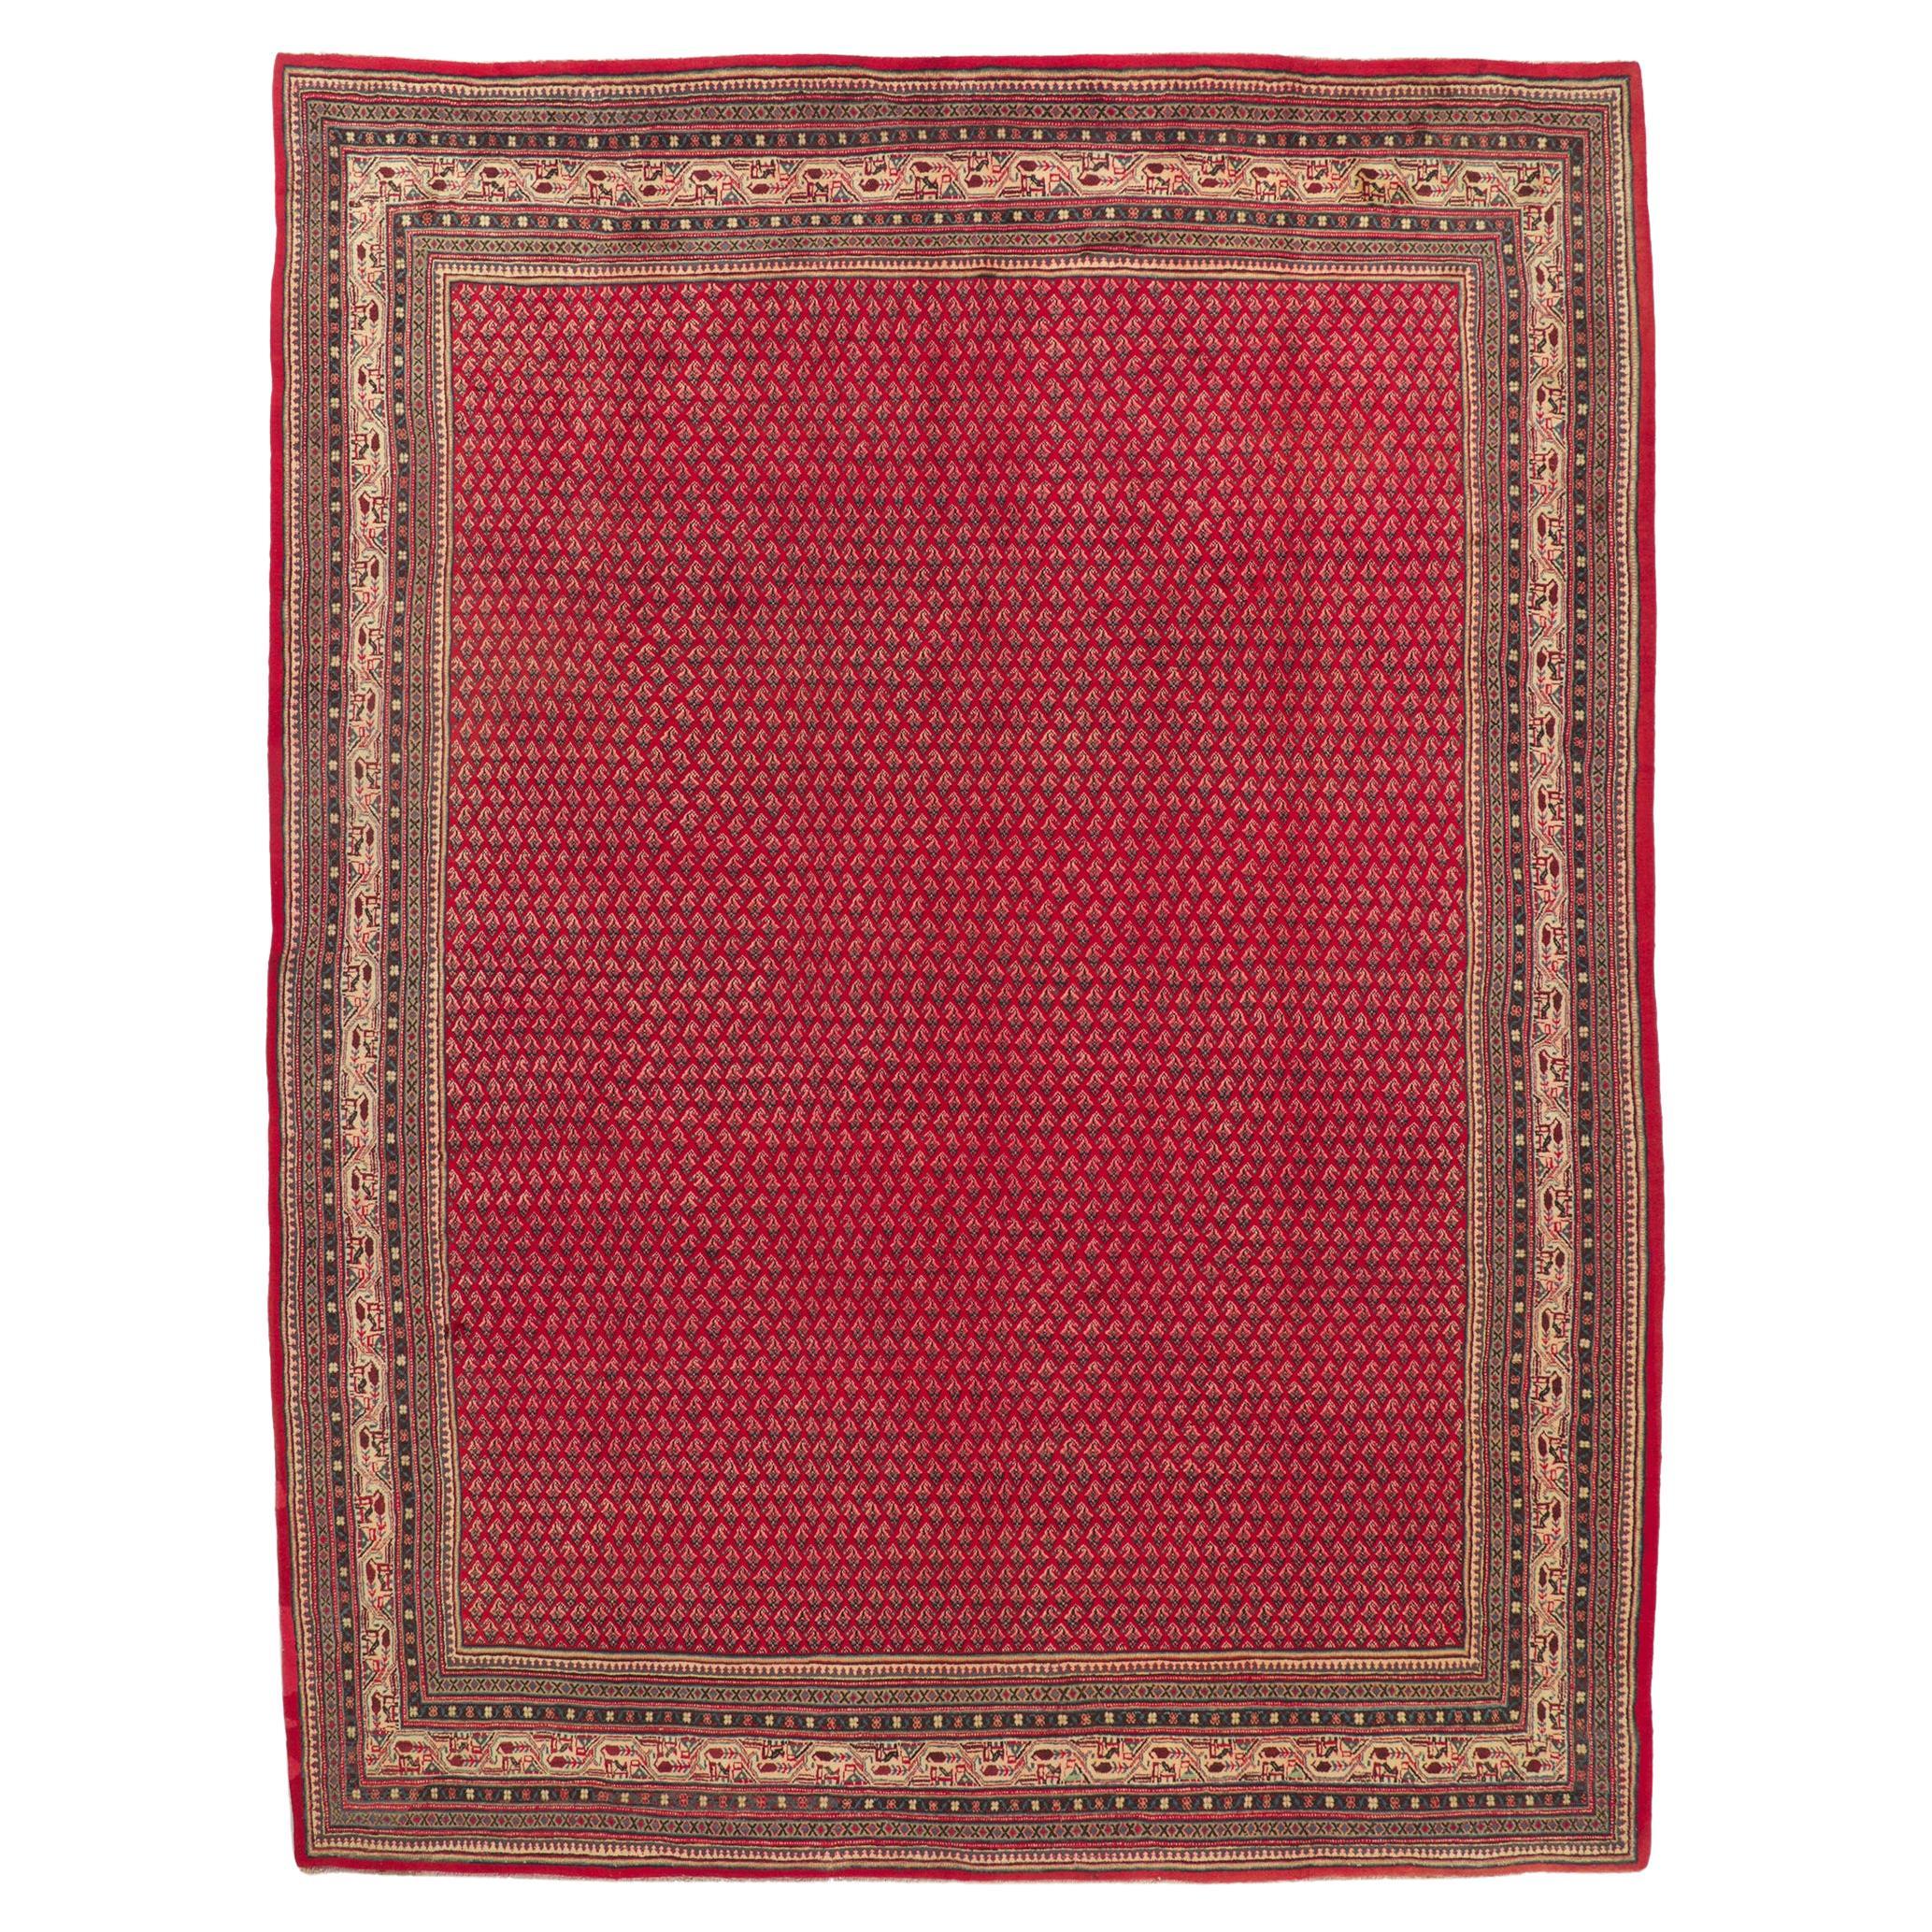 Grand tapis persan rouge vintage Mahal